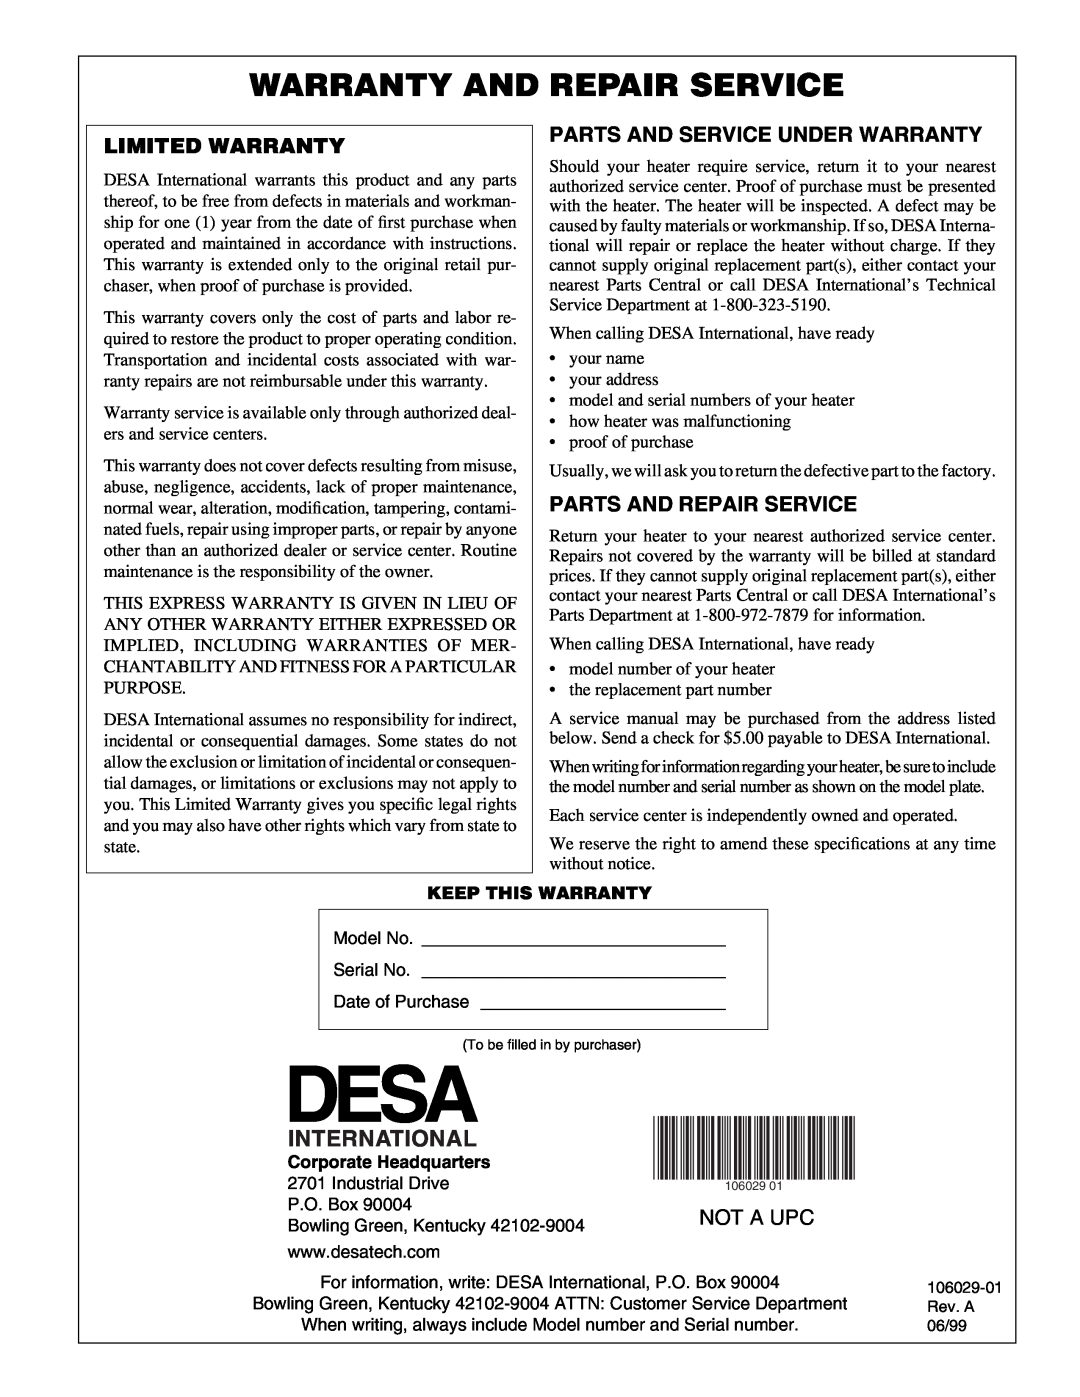 Desa SB600D Limited Warranty, Parts And Service Under Warranty, Parts And Repair Service, Warranty And Repair Service 